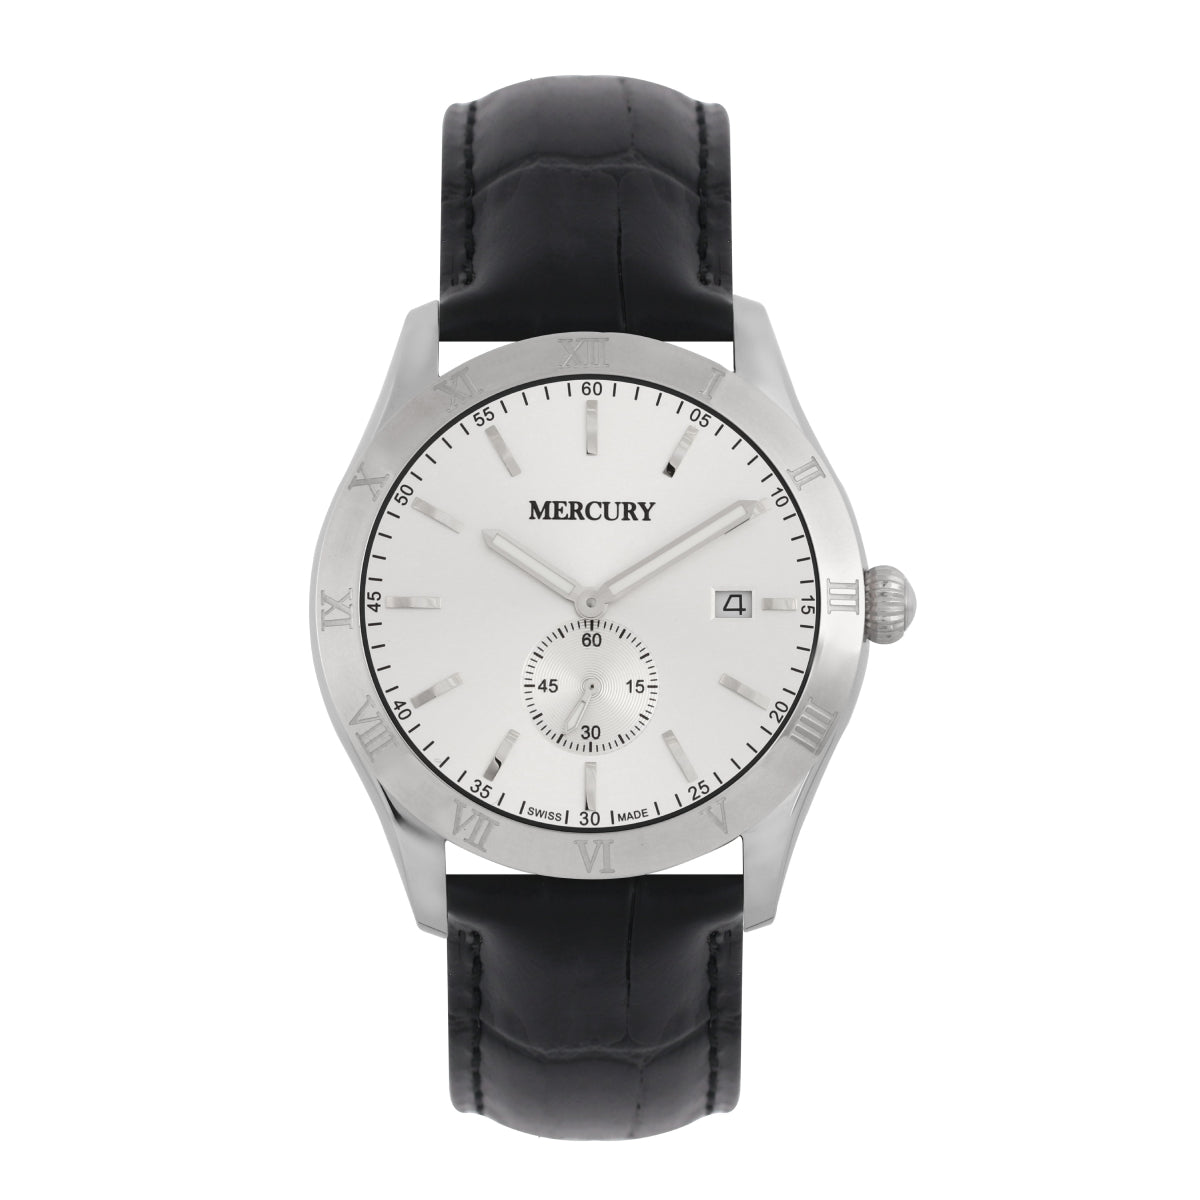 Mercury Men's Swiss Quartz Watch with White Dial - MER-0050